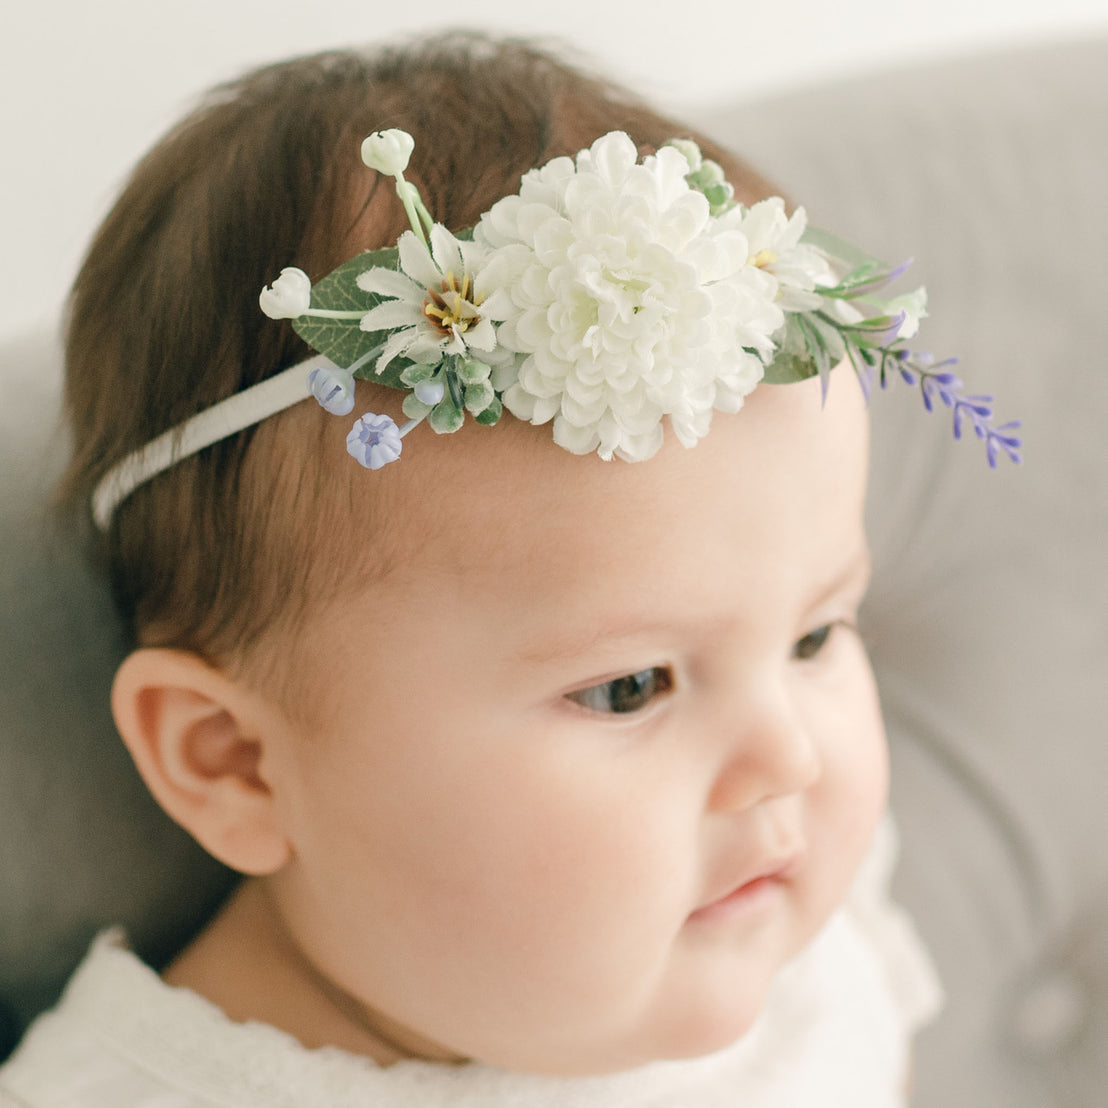 Baby girl wearing the heather Emily Flower Headband.